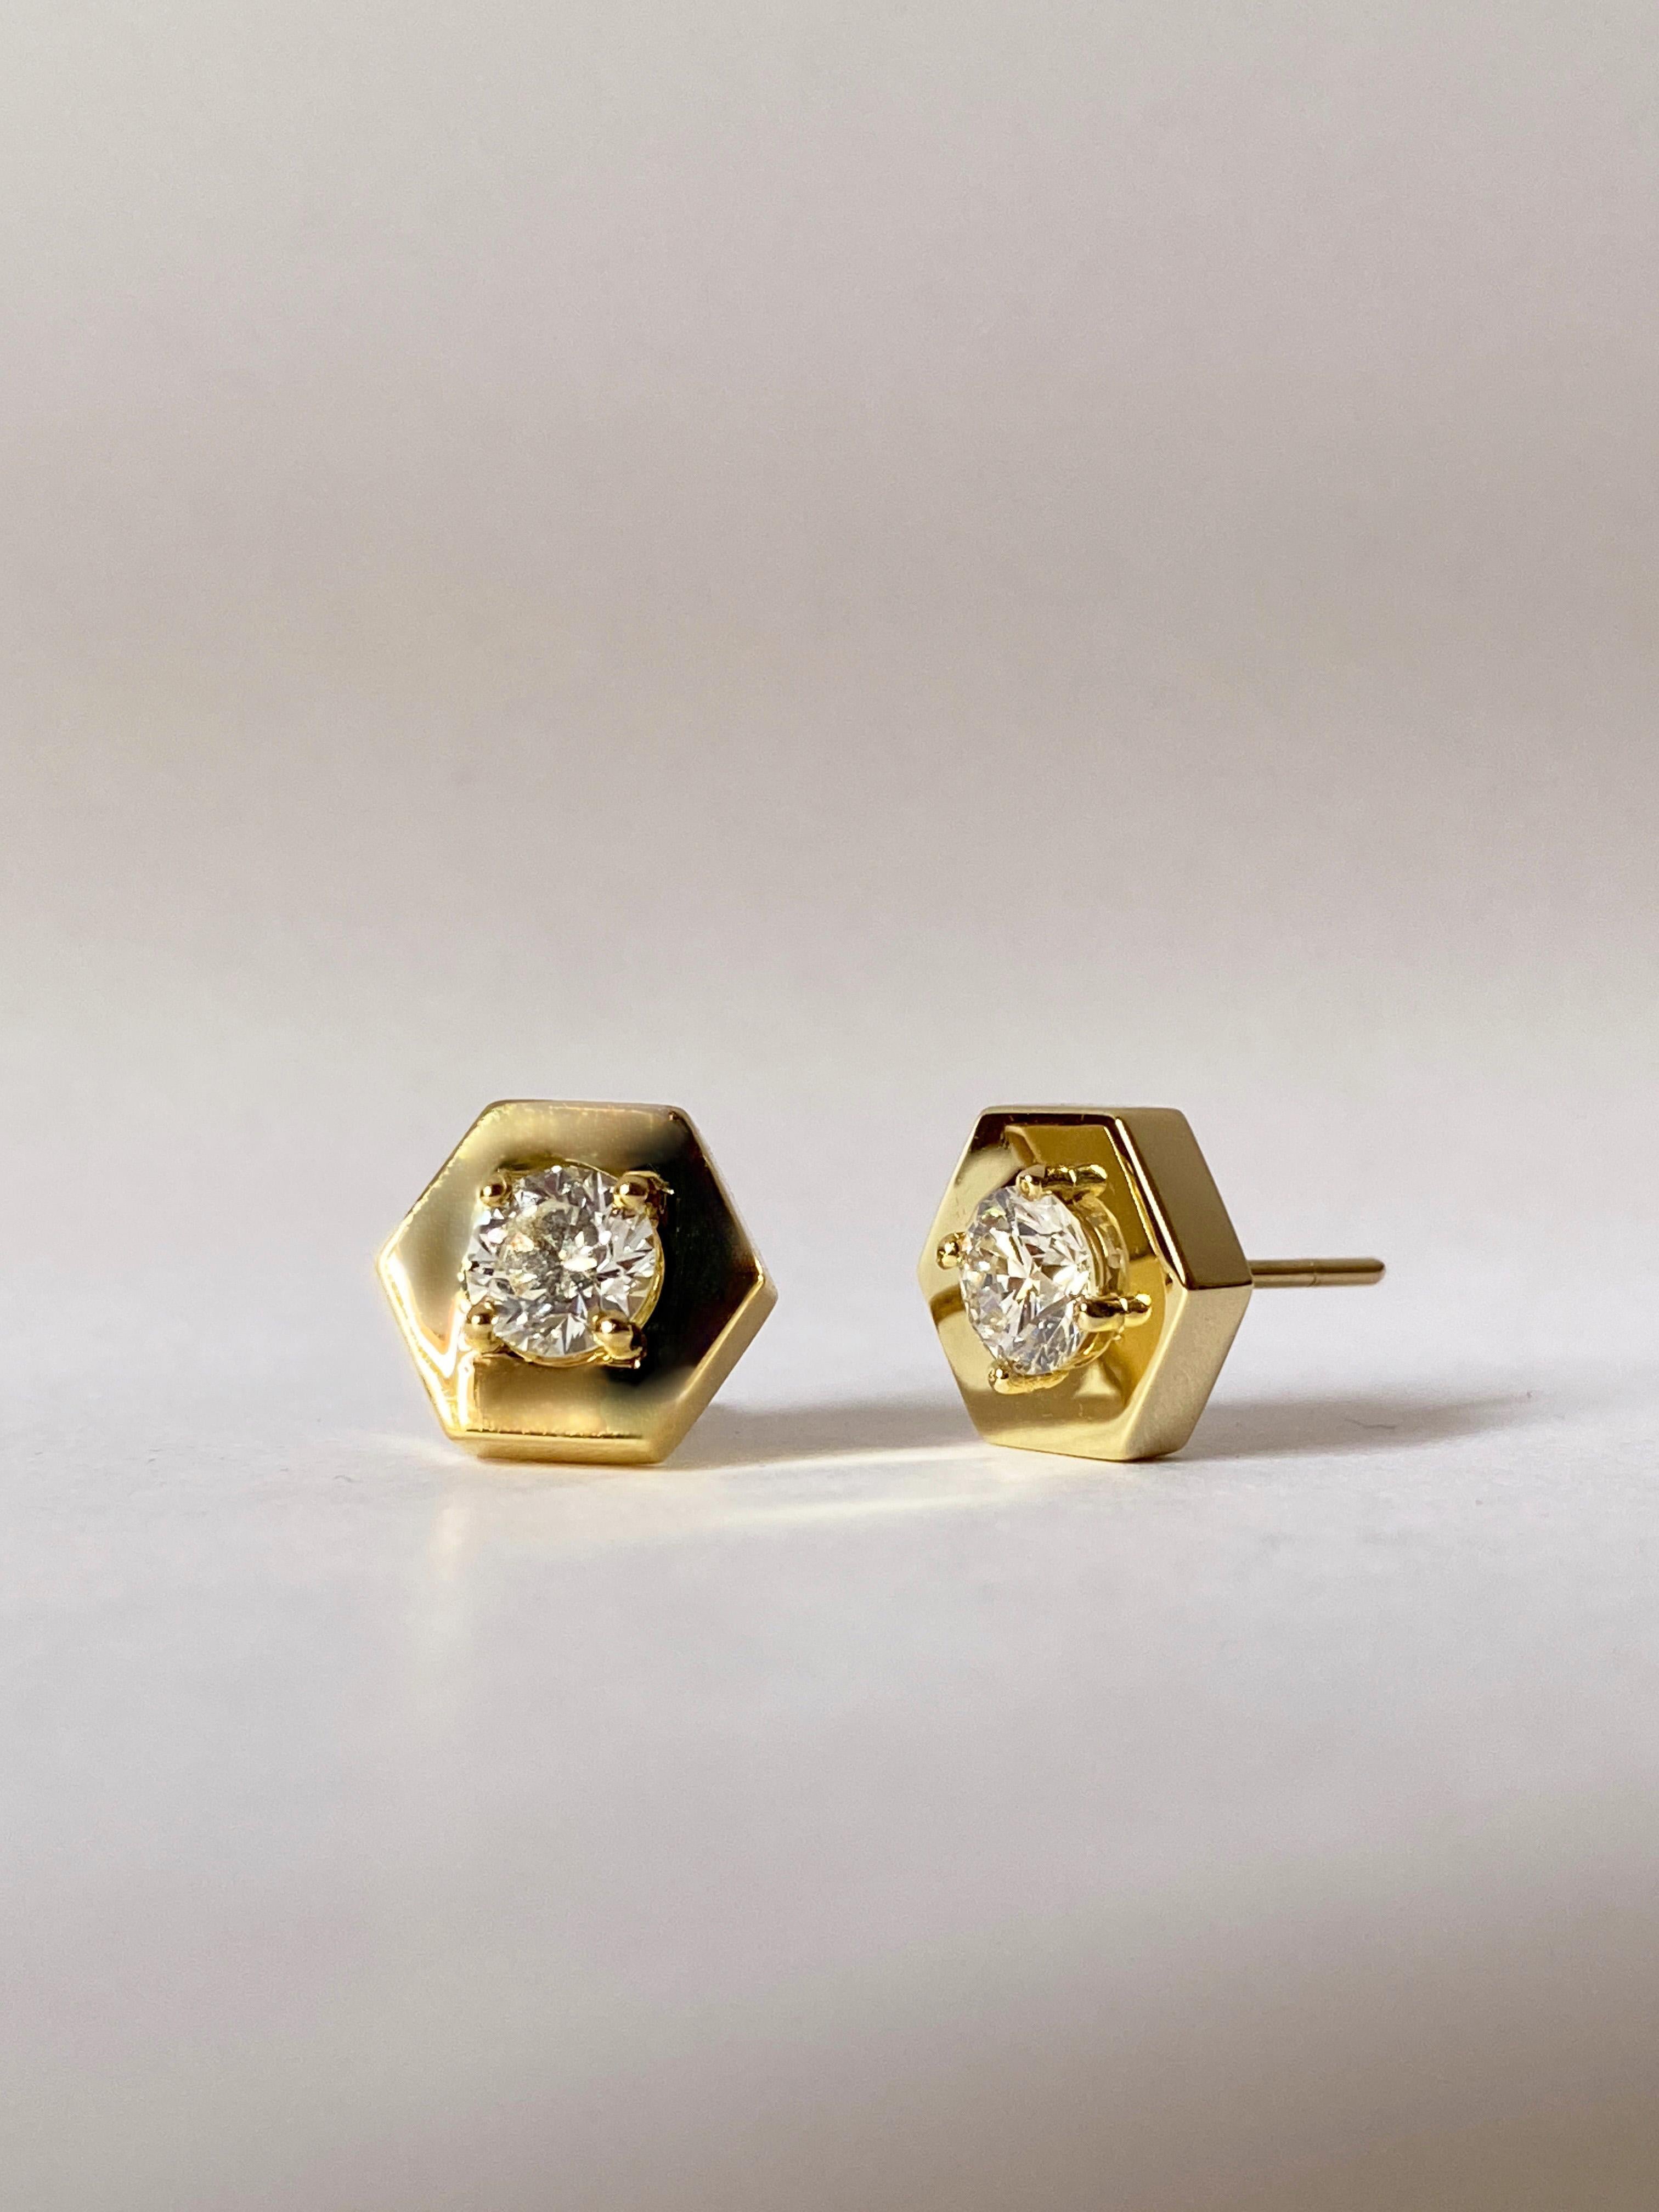 Rossella Ugolini 18K Gold 0.60 Carats White Diamonds Stud Hexagonal Earrings For Sale 1